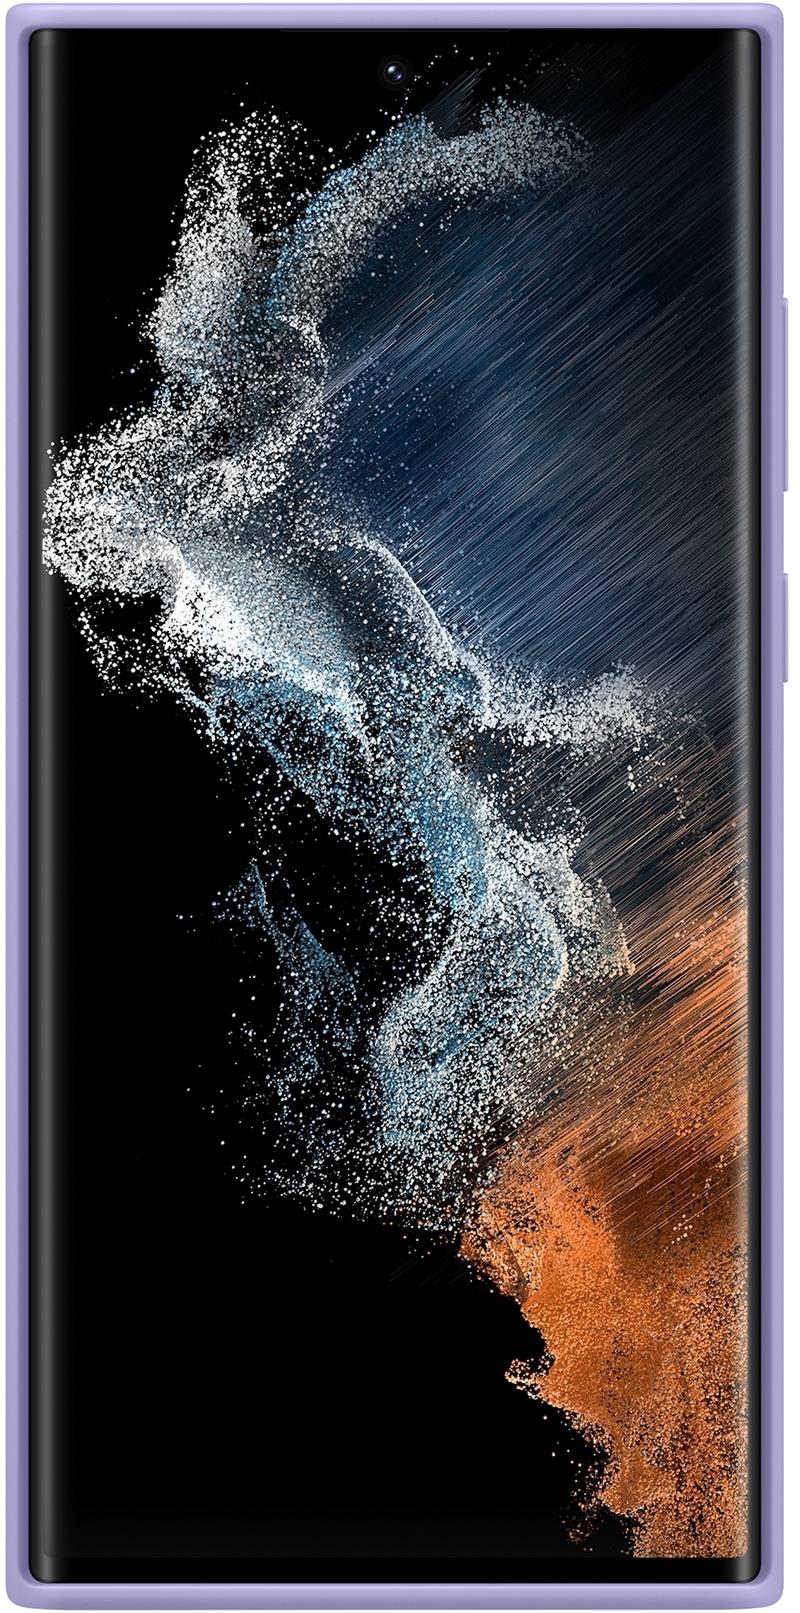 Samsung EF-PS908T mobiele telefoon behuizingen 17,3 cm (6.8"") Hoes Violet